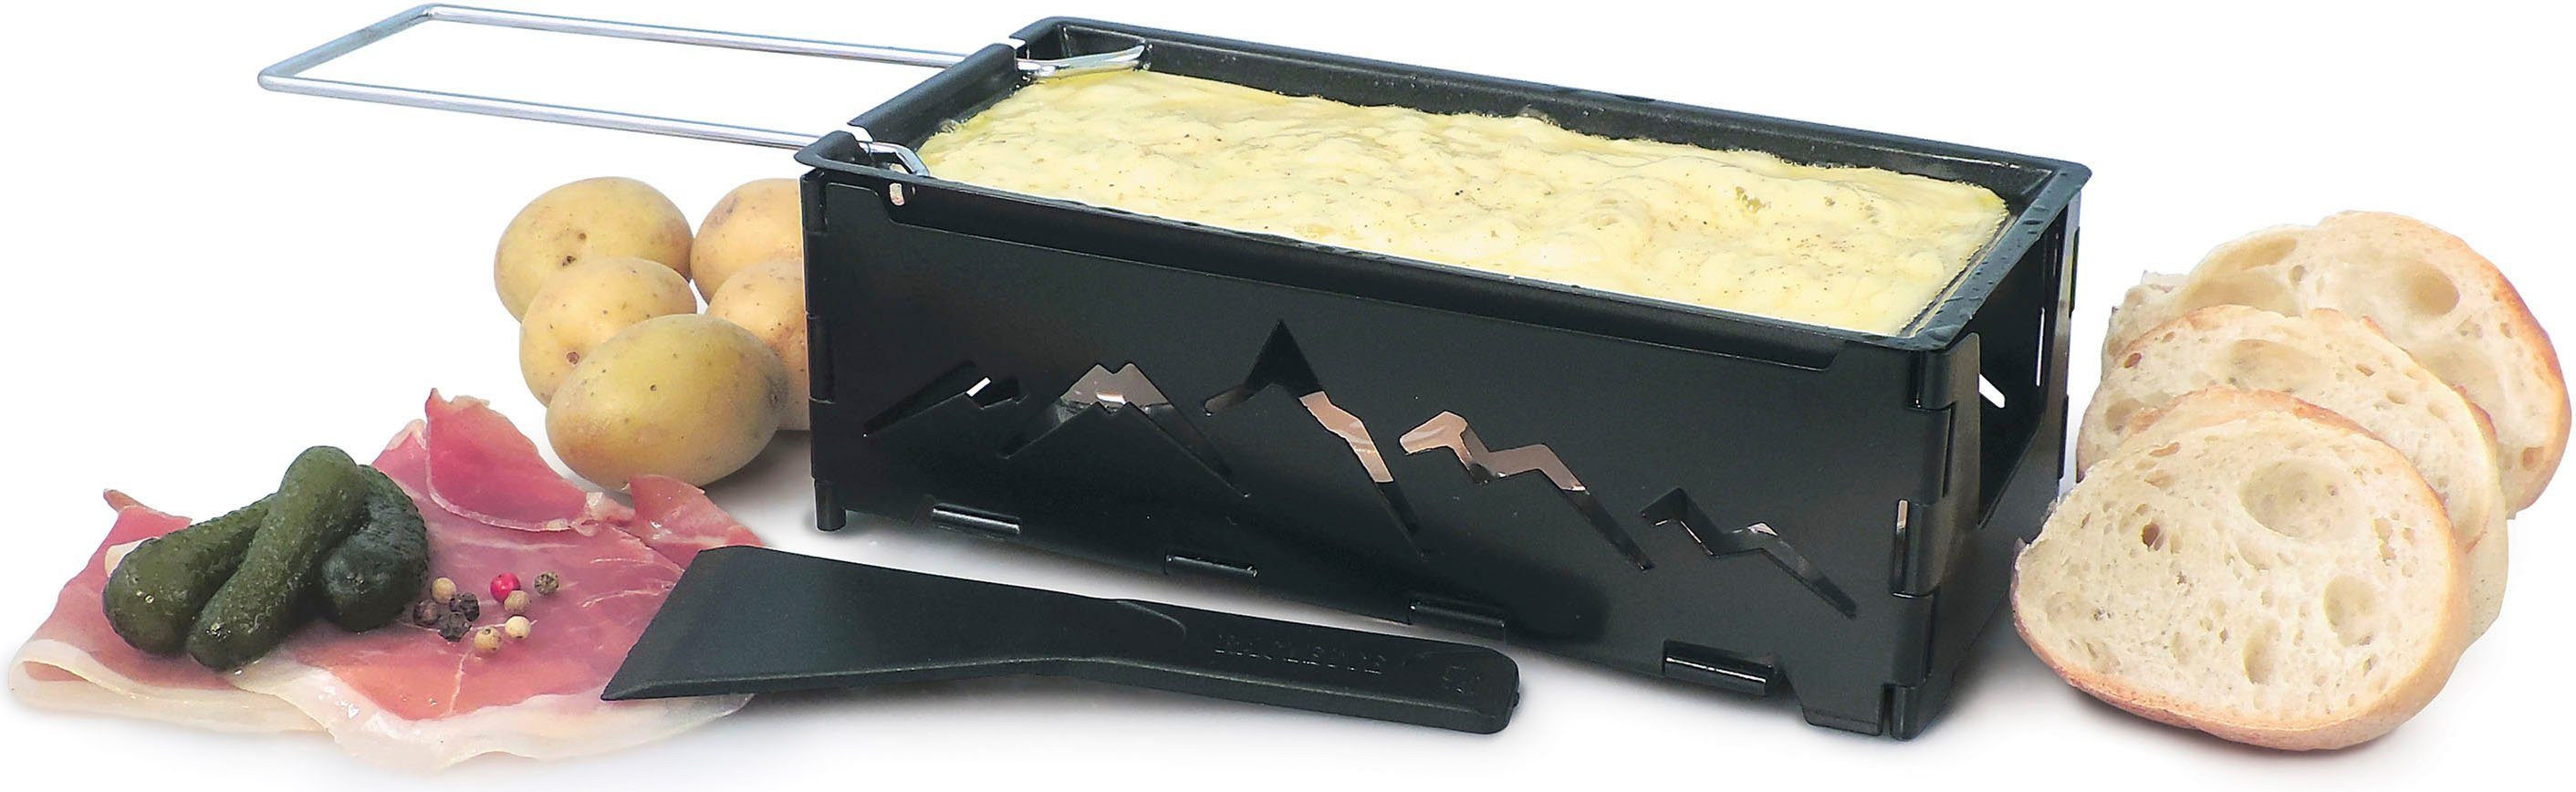 Edelstahl, SWISSMAR Candlelight, faltbar Nordic Raclette